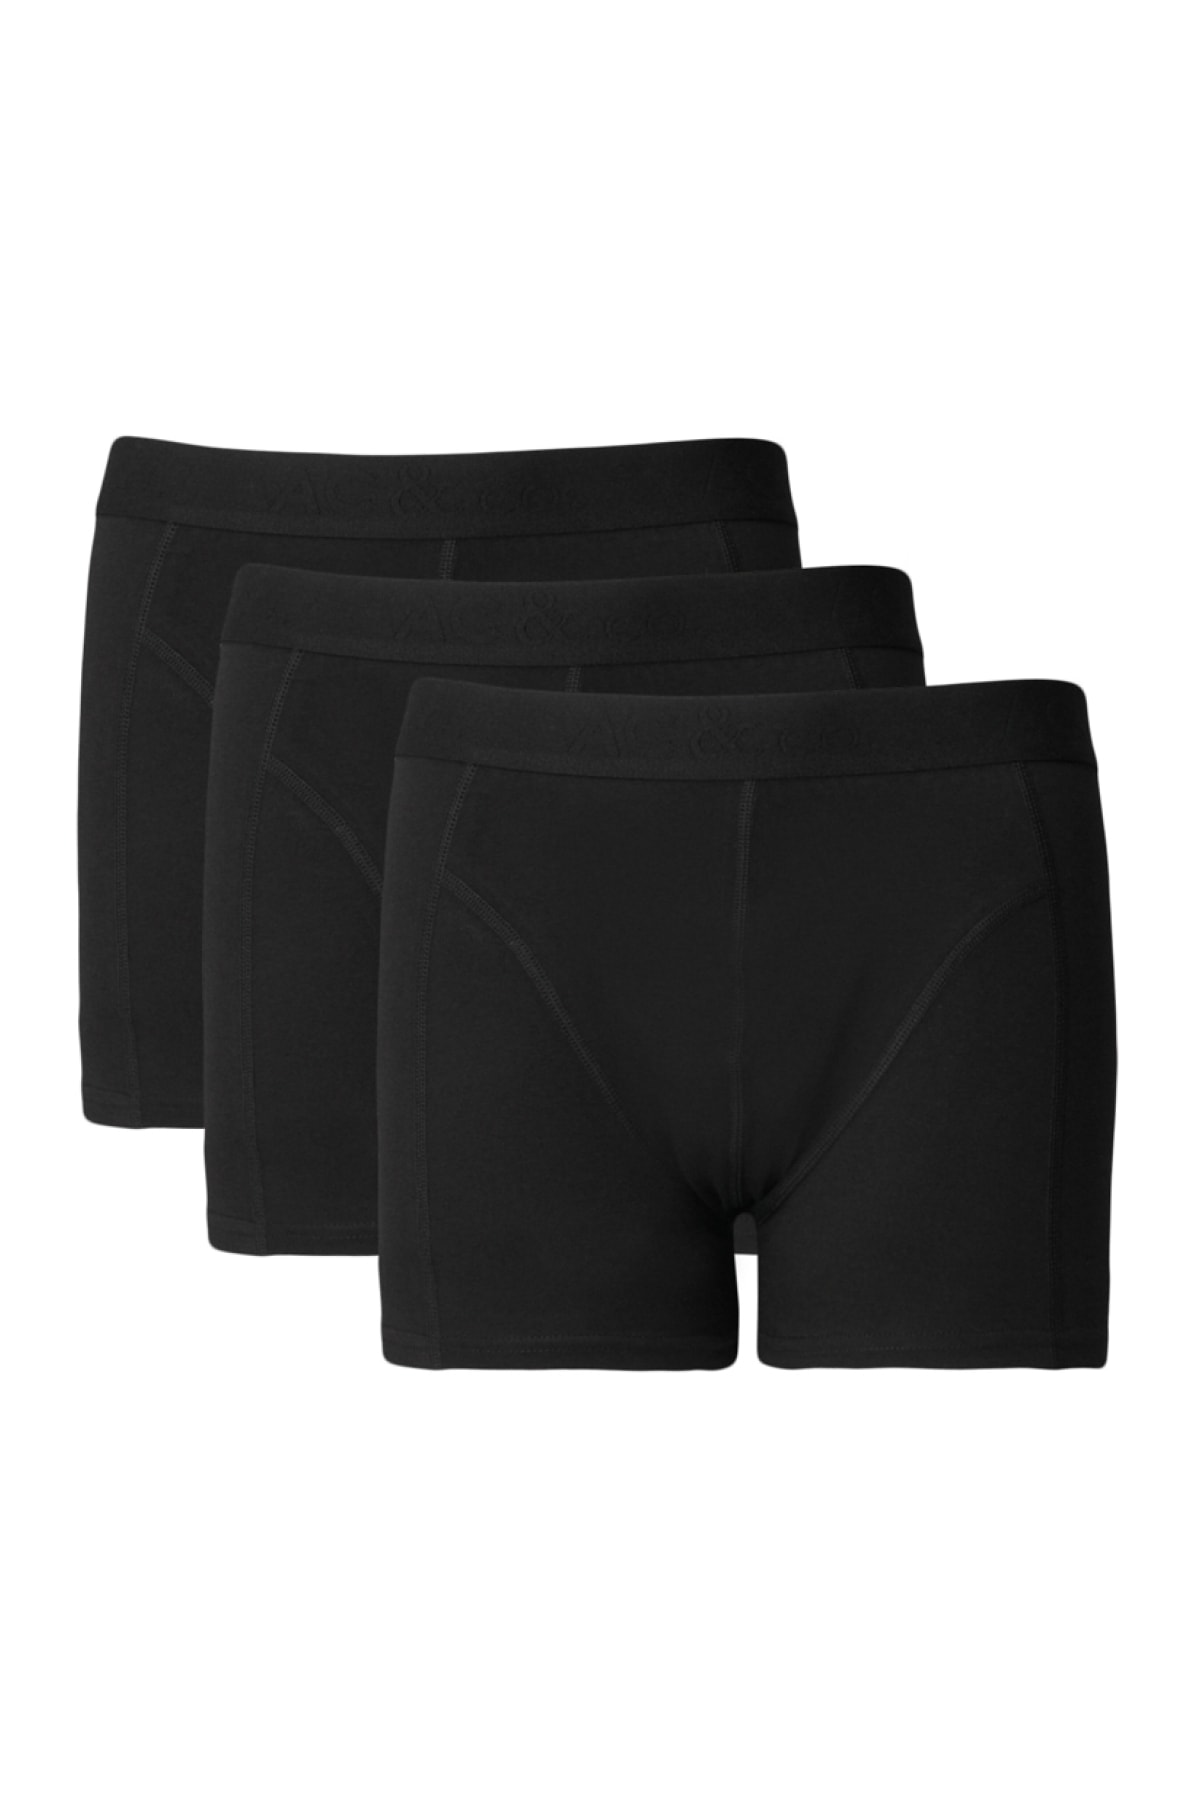 AC&Co / Altınyıldız Classics Men's Black 3-Pack Flexible Cotton Boxers